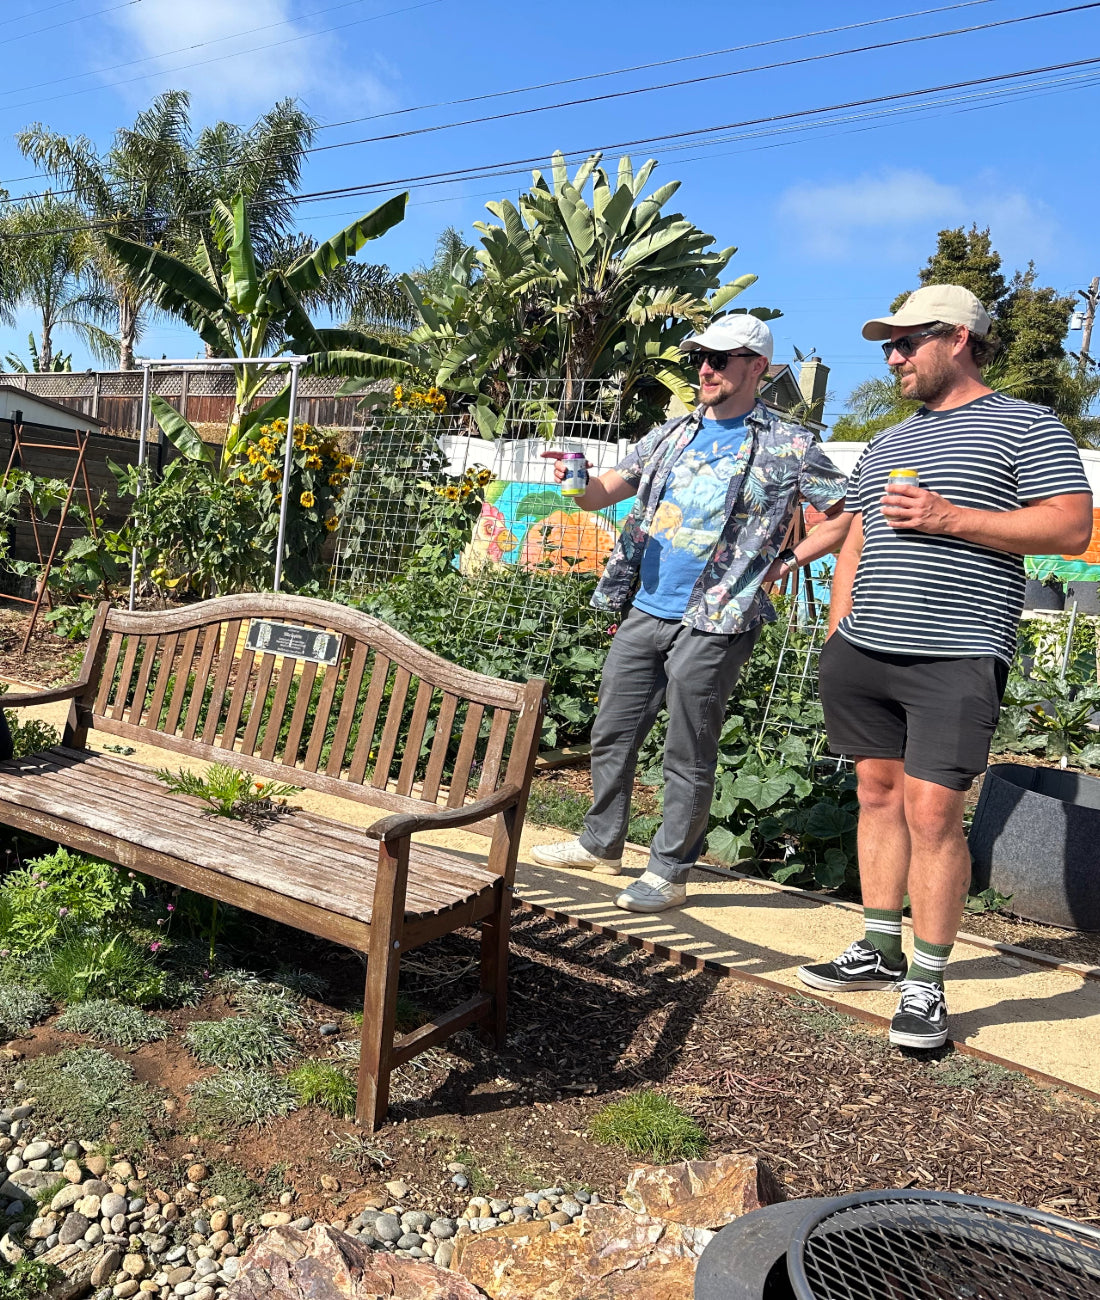 Growing Community: How Gardens Transform Communities